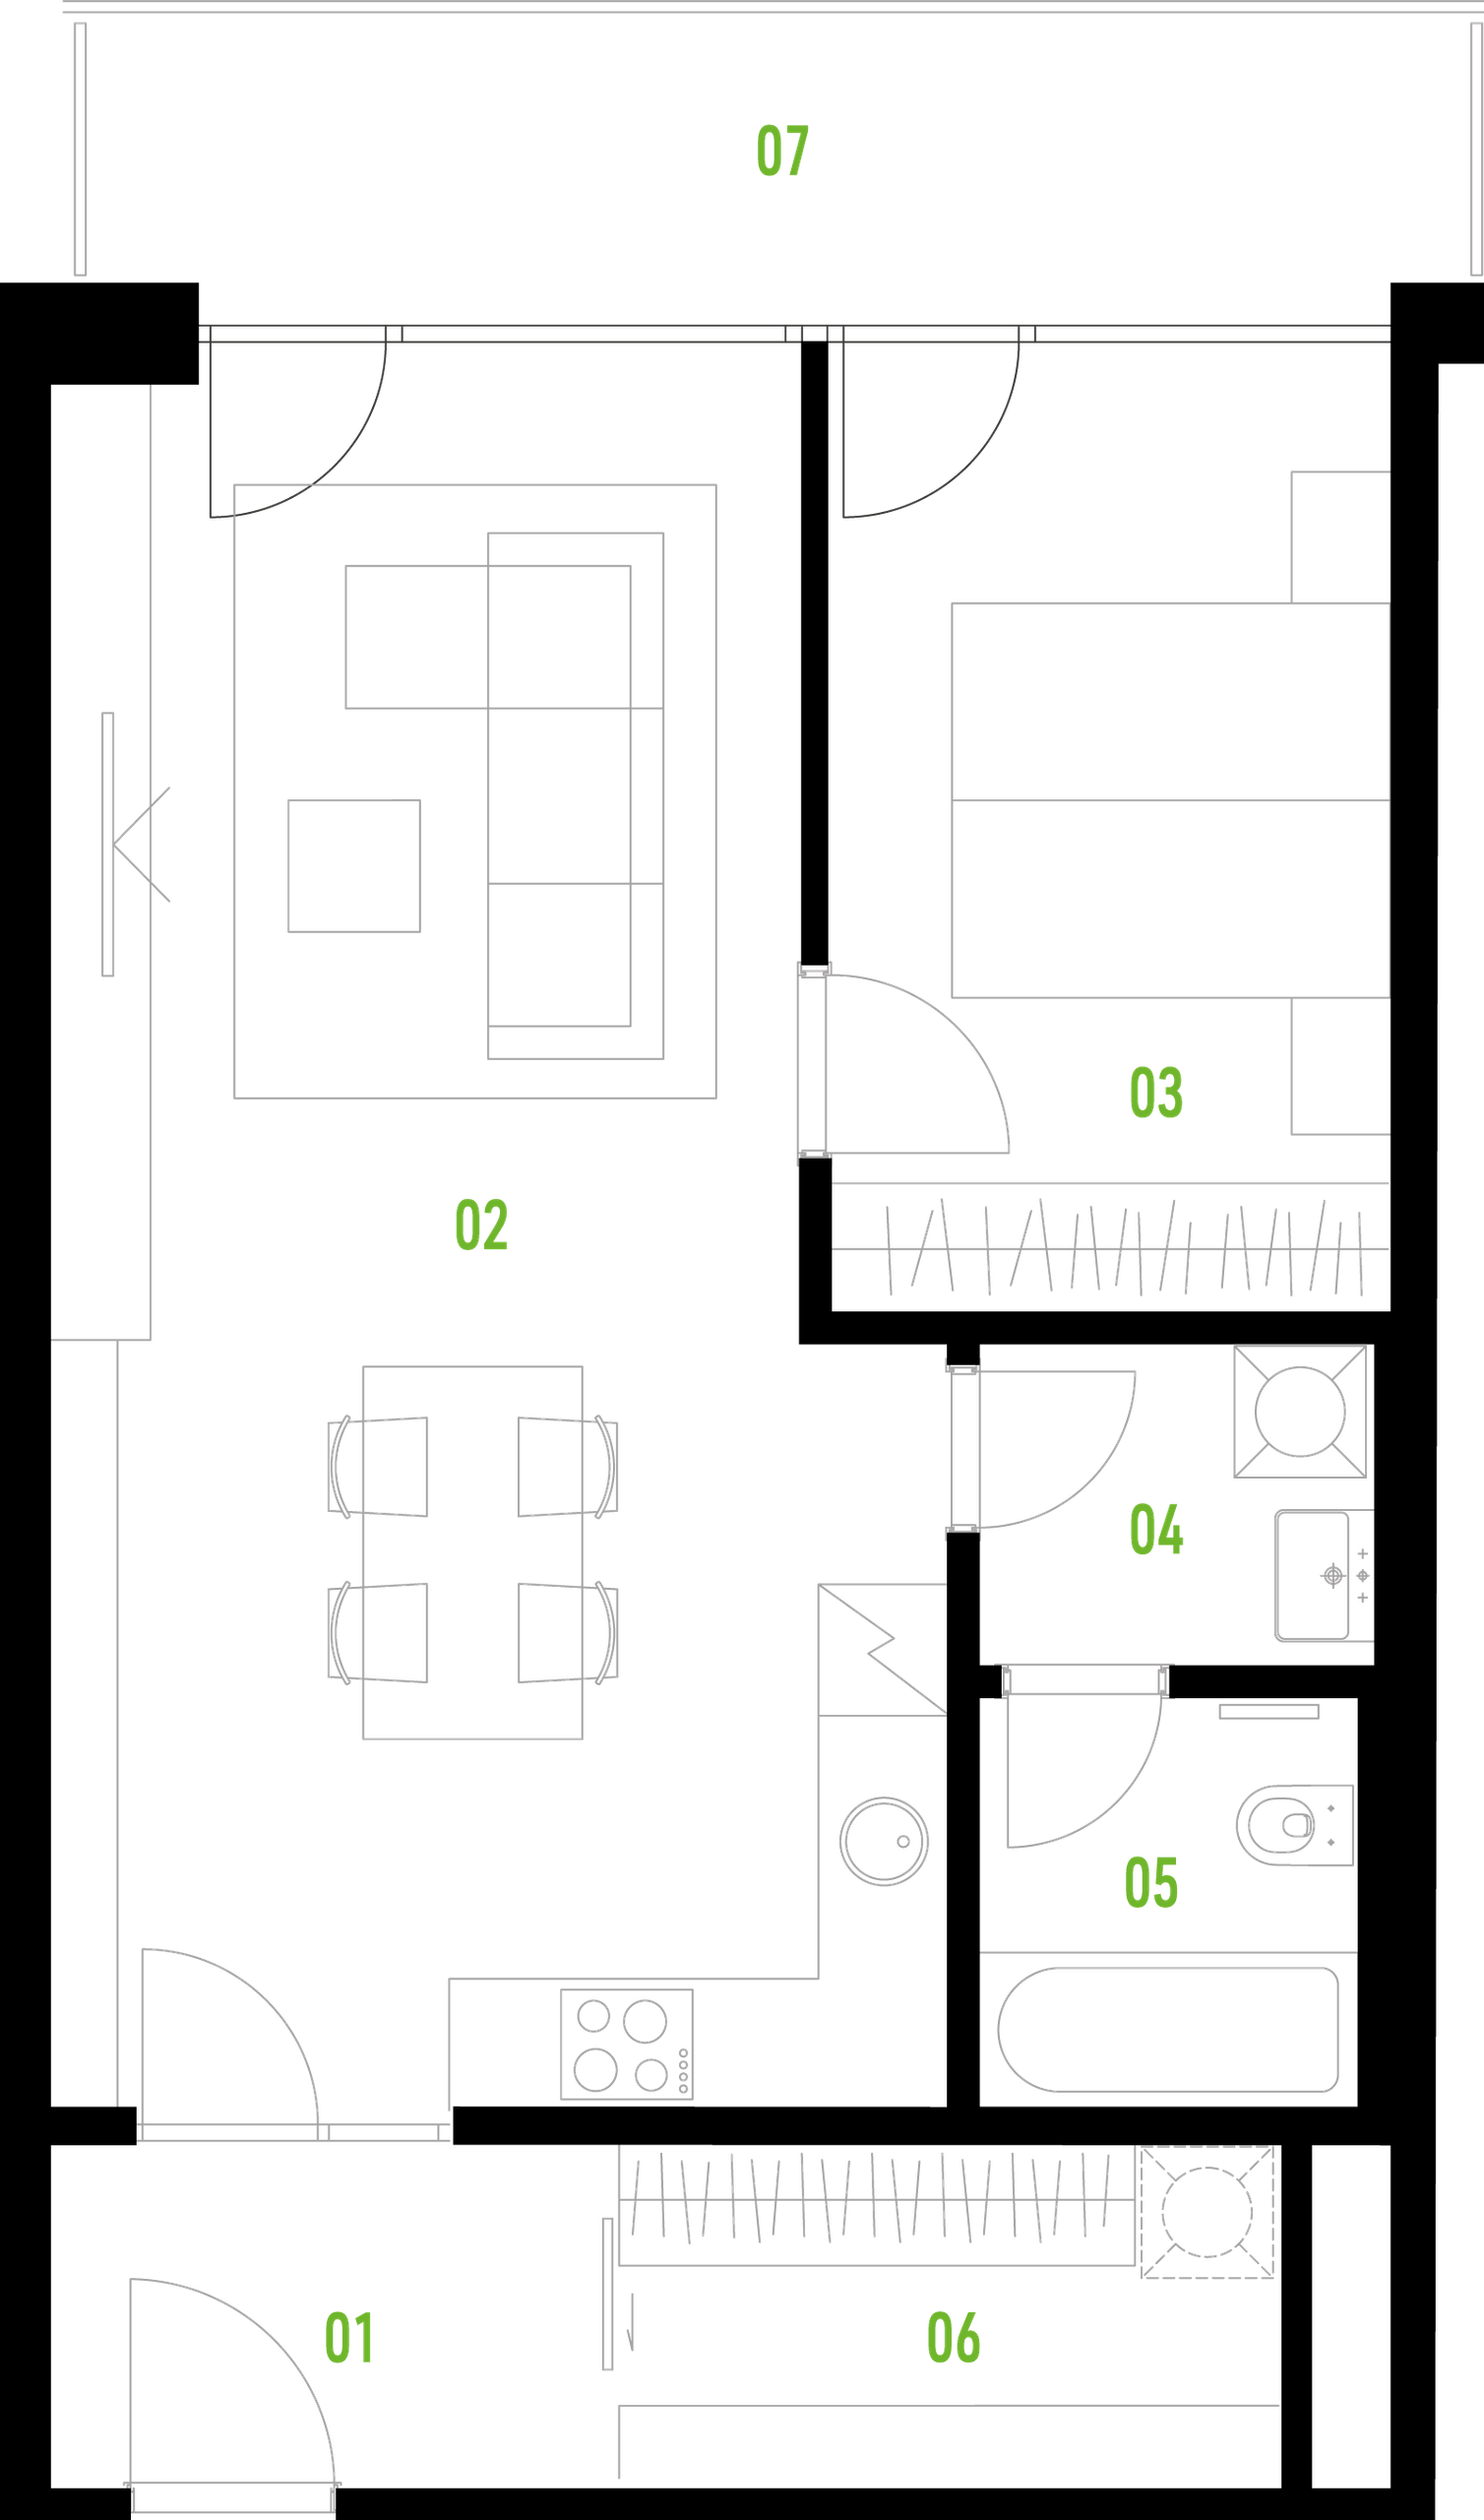 A34 floor plan